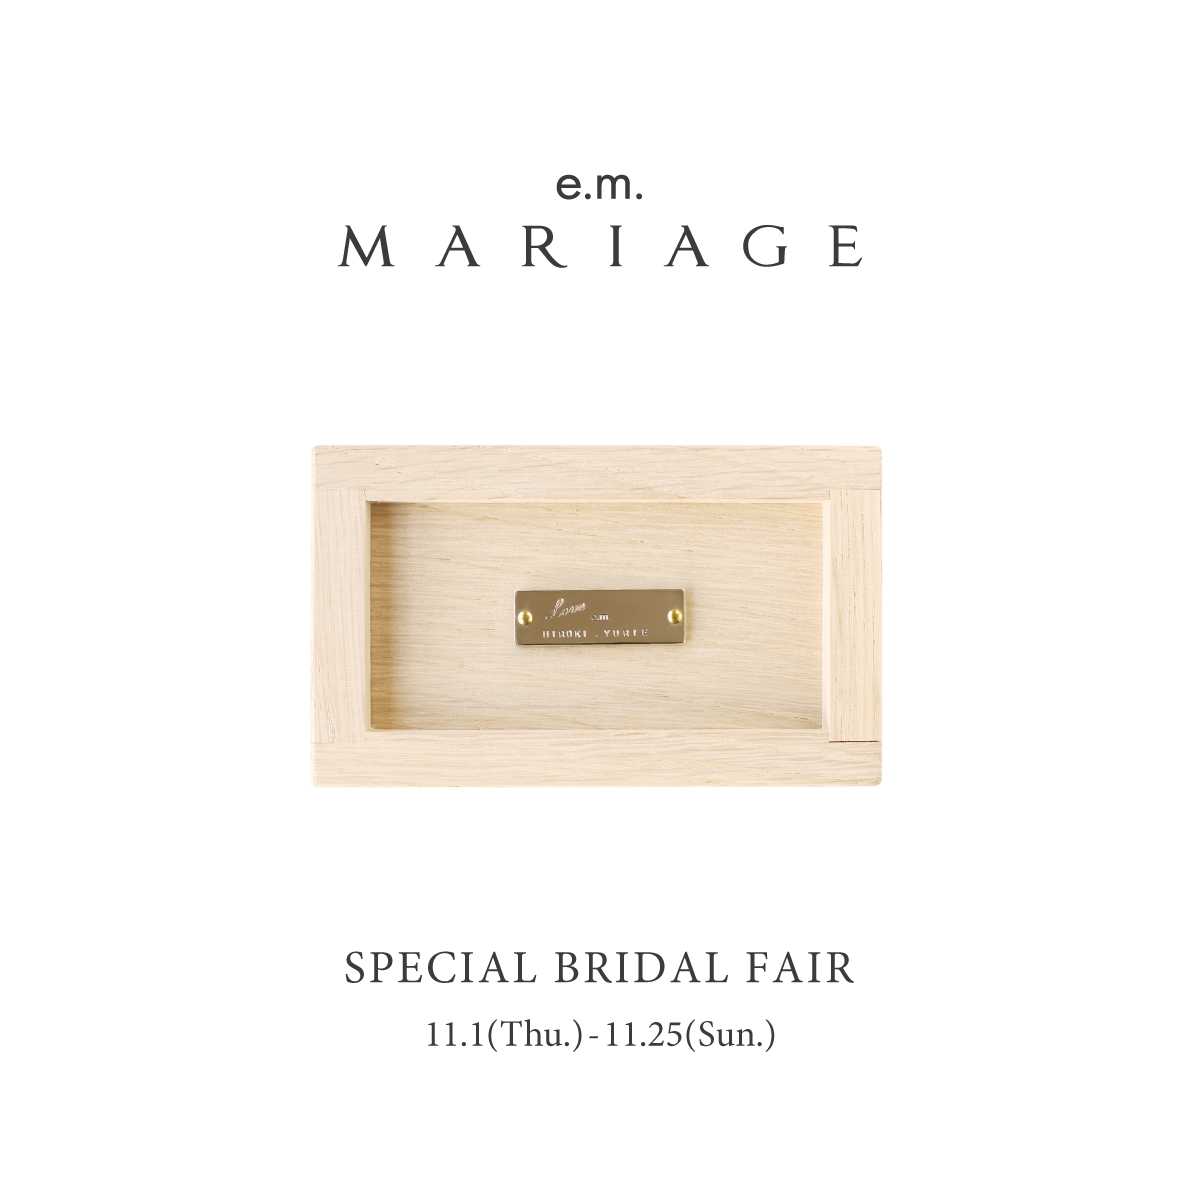 e.m.mariage_specialbridalfair_e.m.yokohama